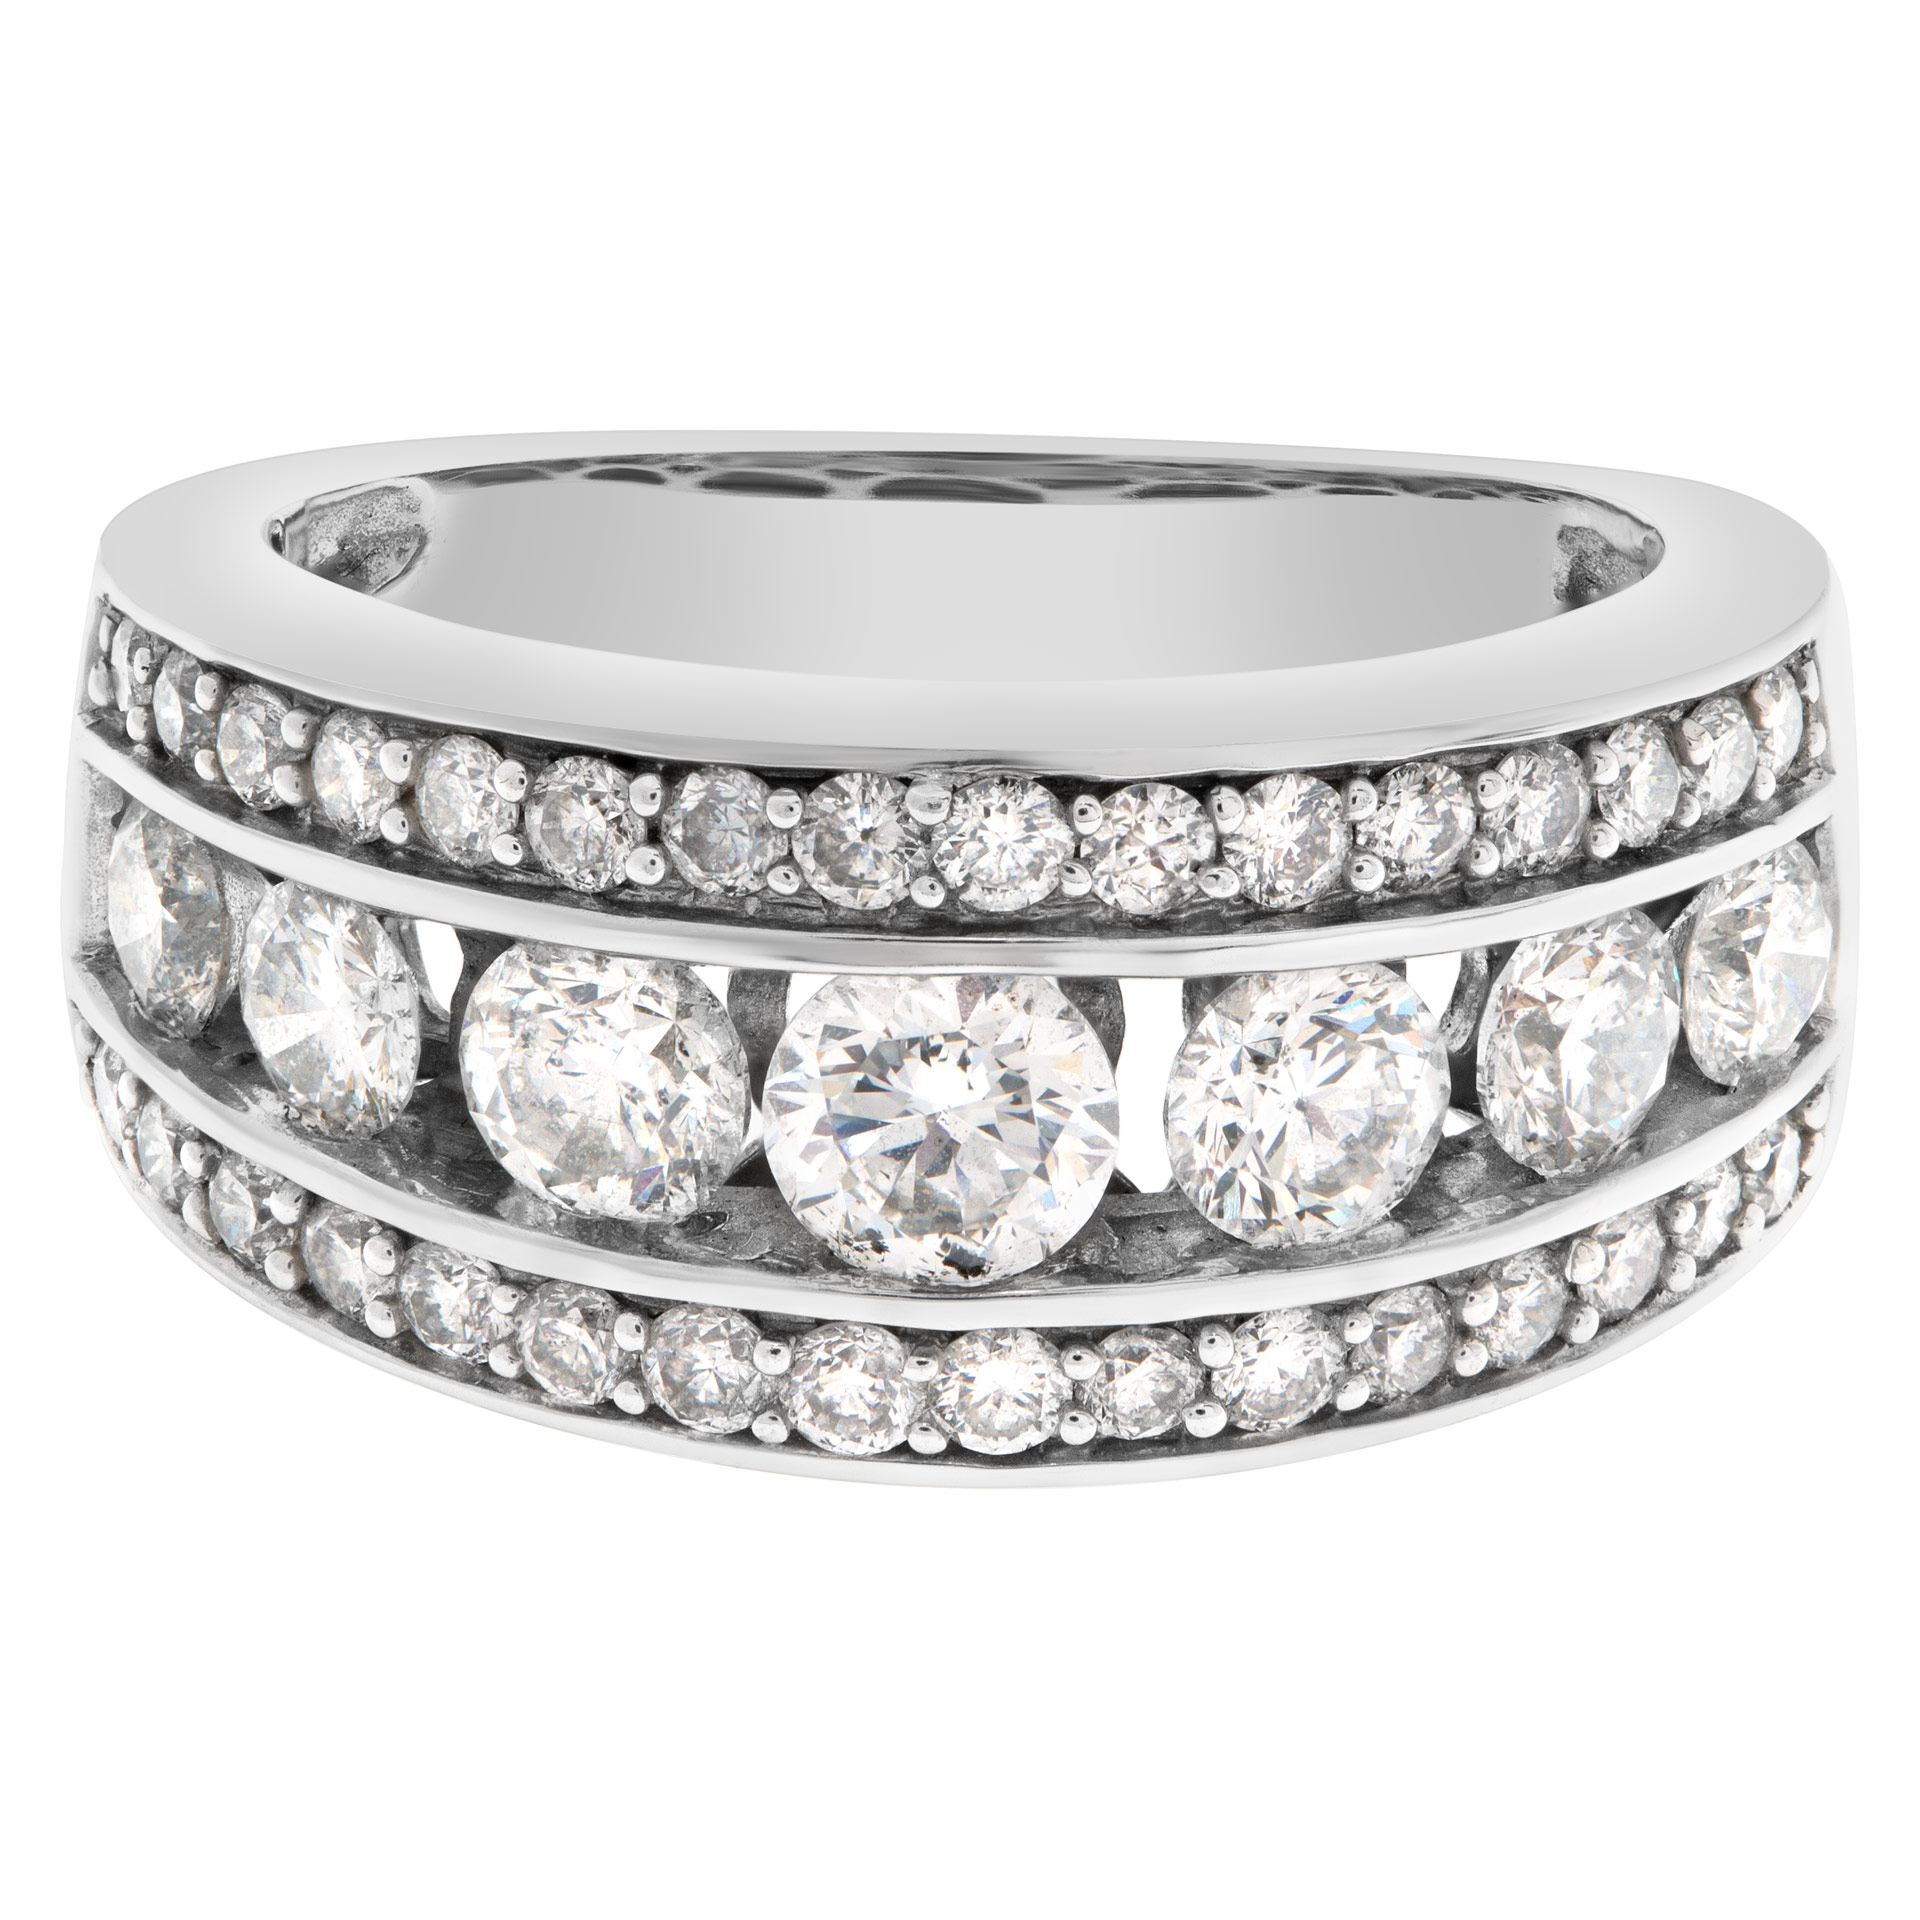 Elegant diamond ring set in 14k white gold with approximately 1.25 carat in diamonds